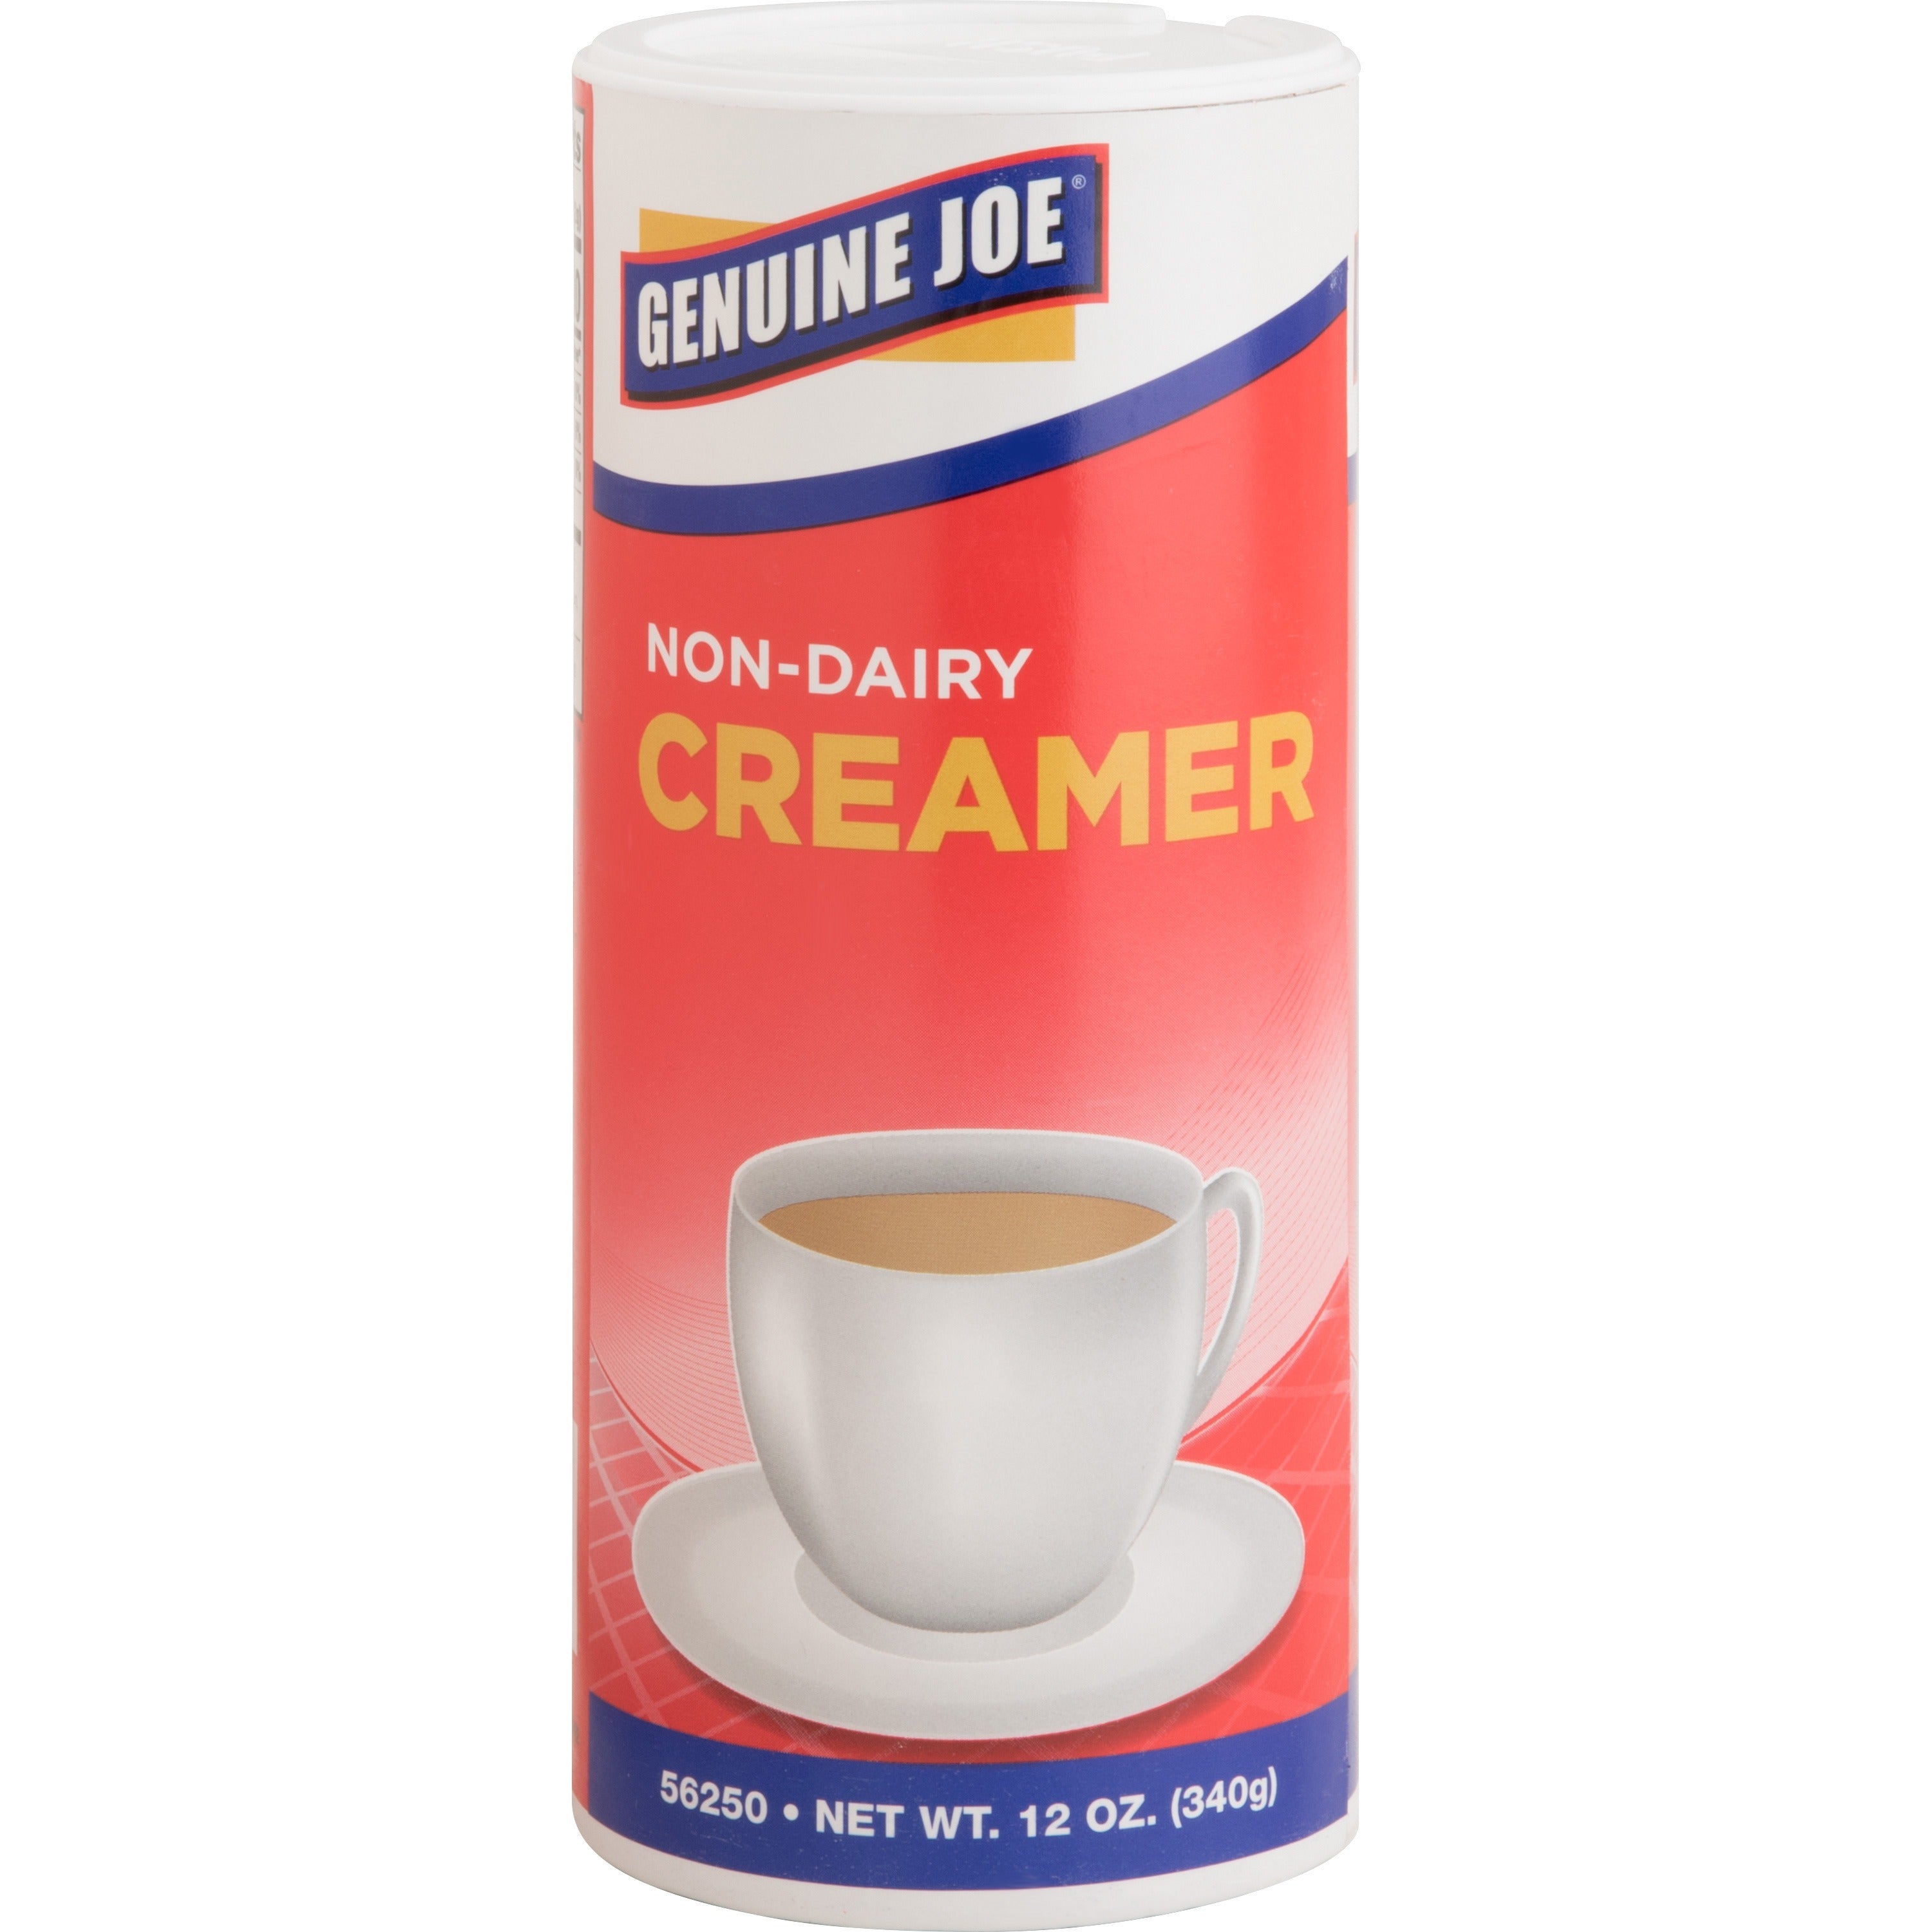 Genuine Joe Nondairy Creamer Canister - 0.75 lb (12 oz) Canister - 3/Pack - 